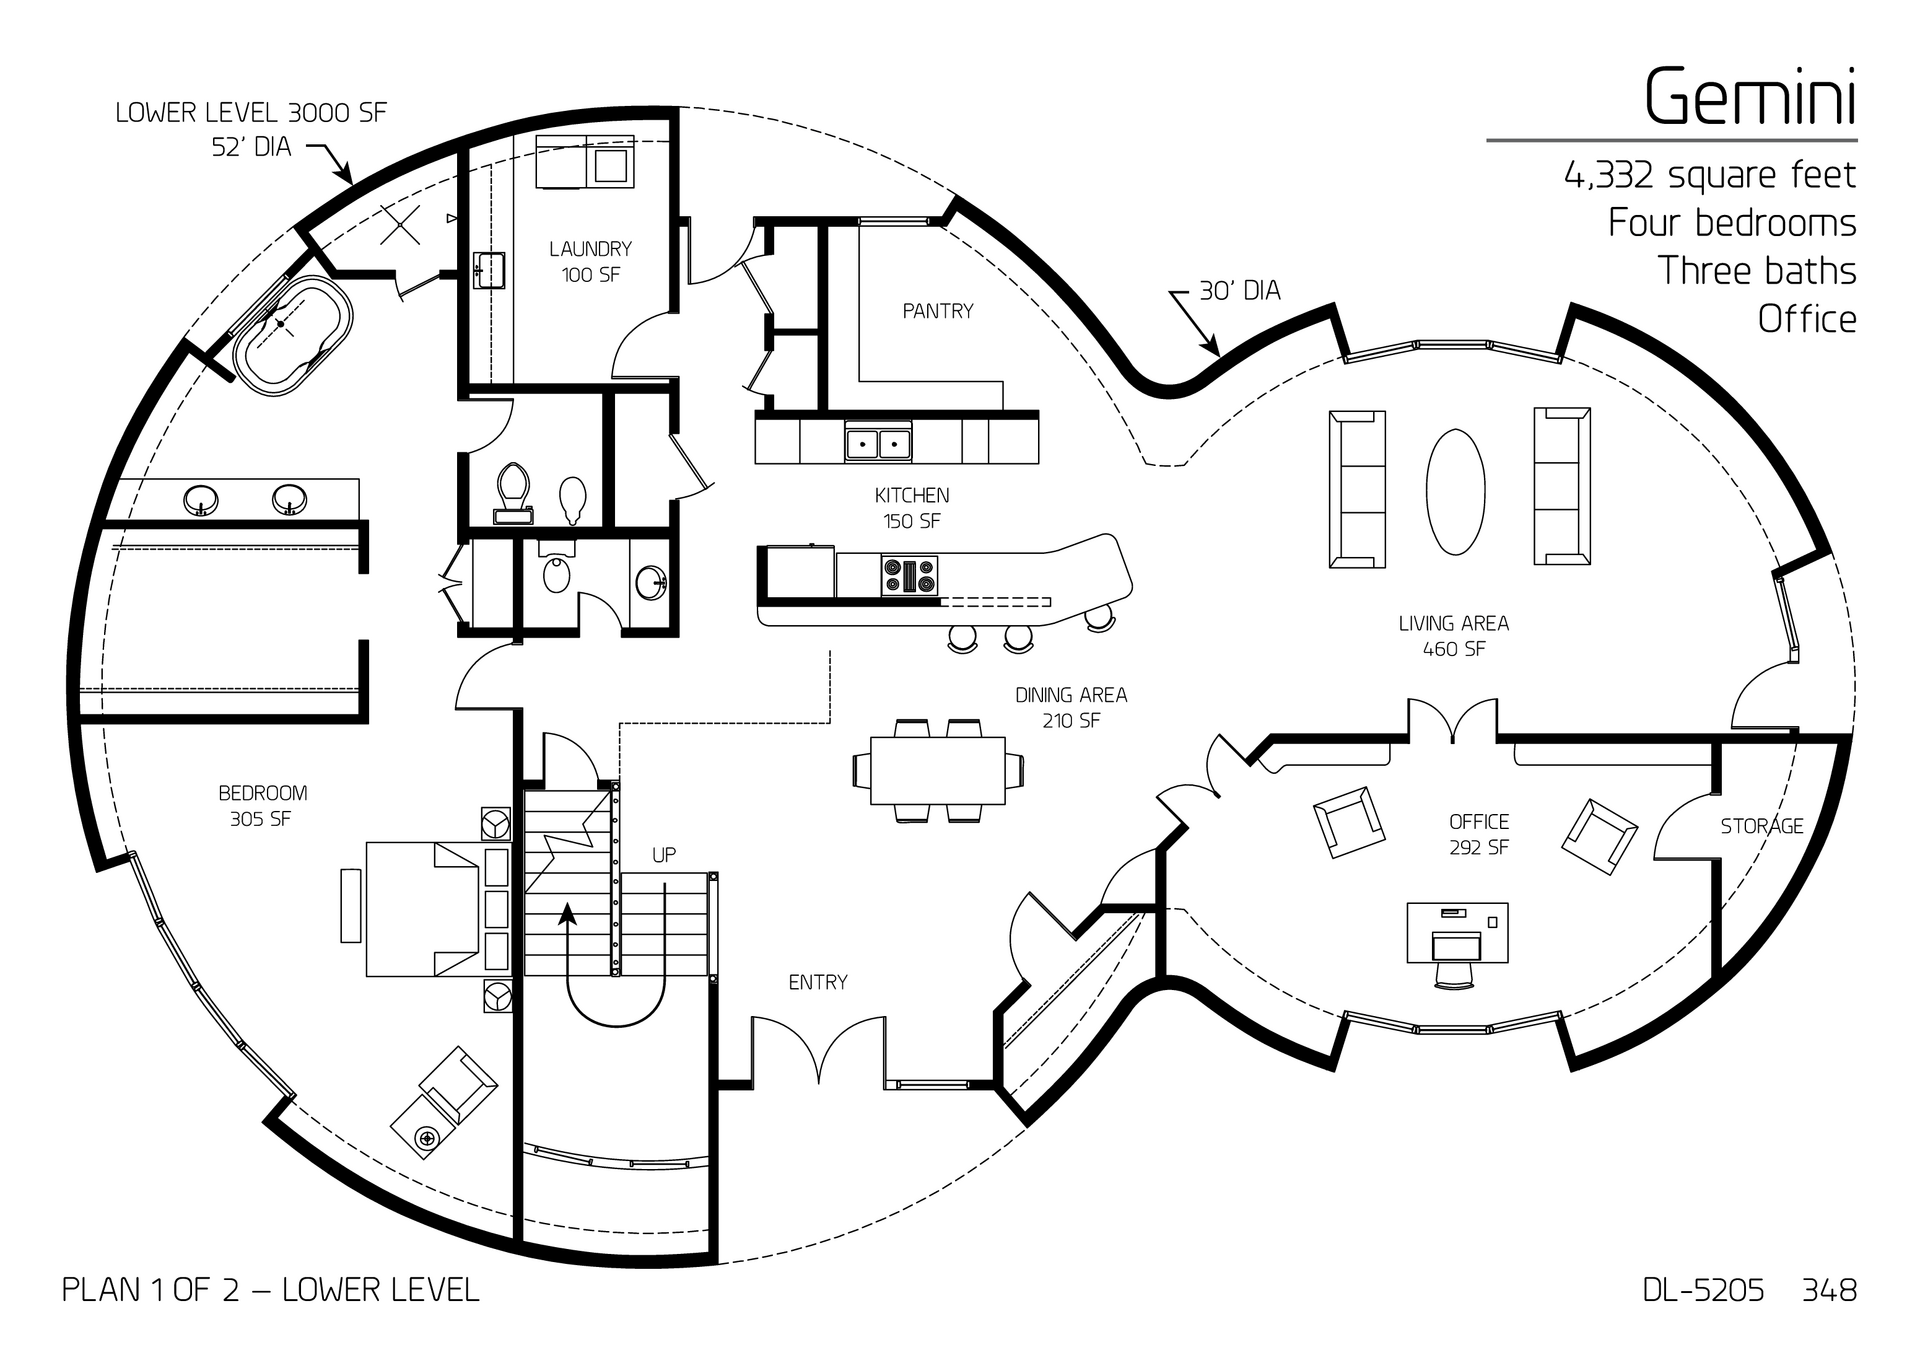 Gemini: Main Floor of a 52' and 30' Diameter Dome, 4,332 SF, Four-Bedroom, Three-bath Floor Plan.